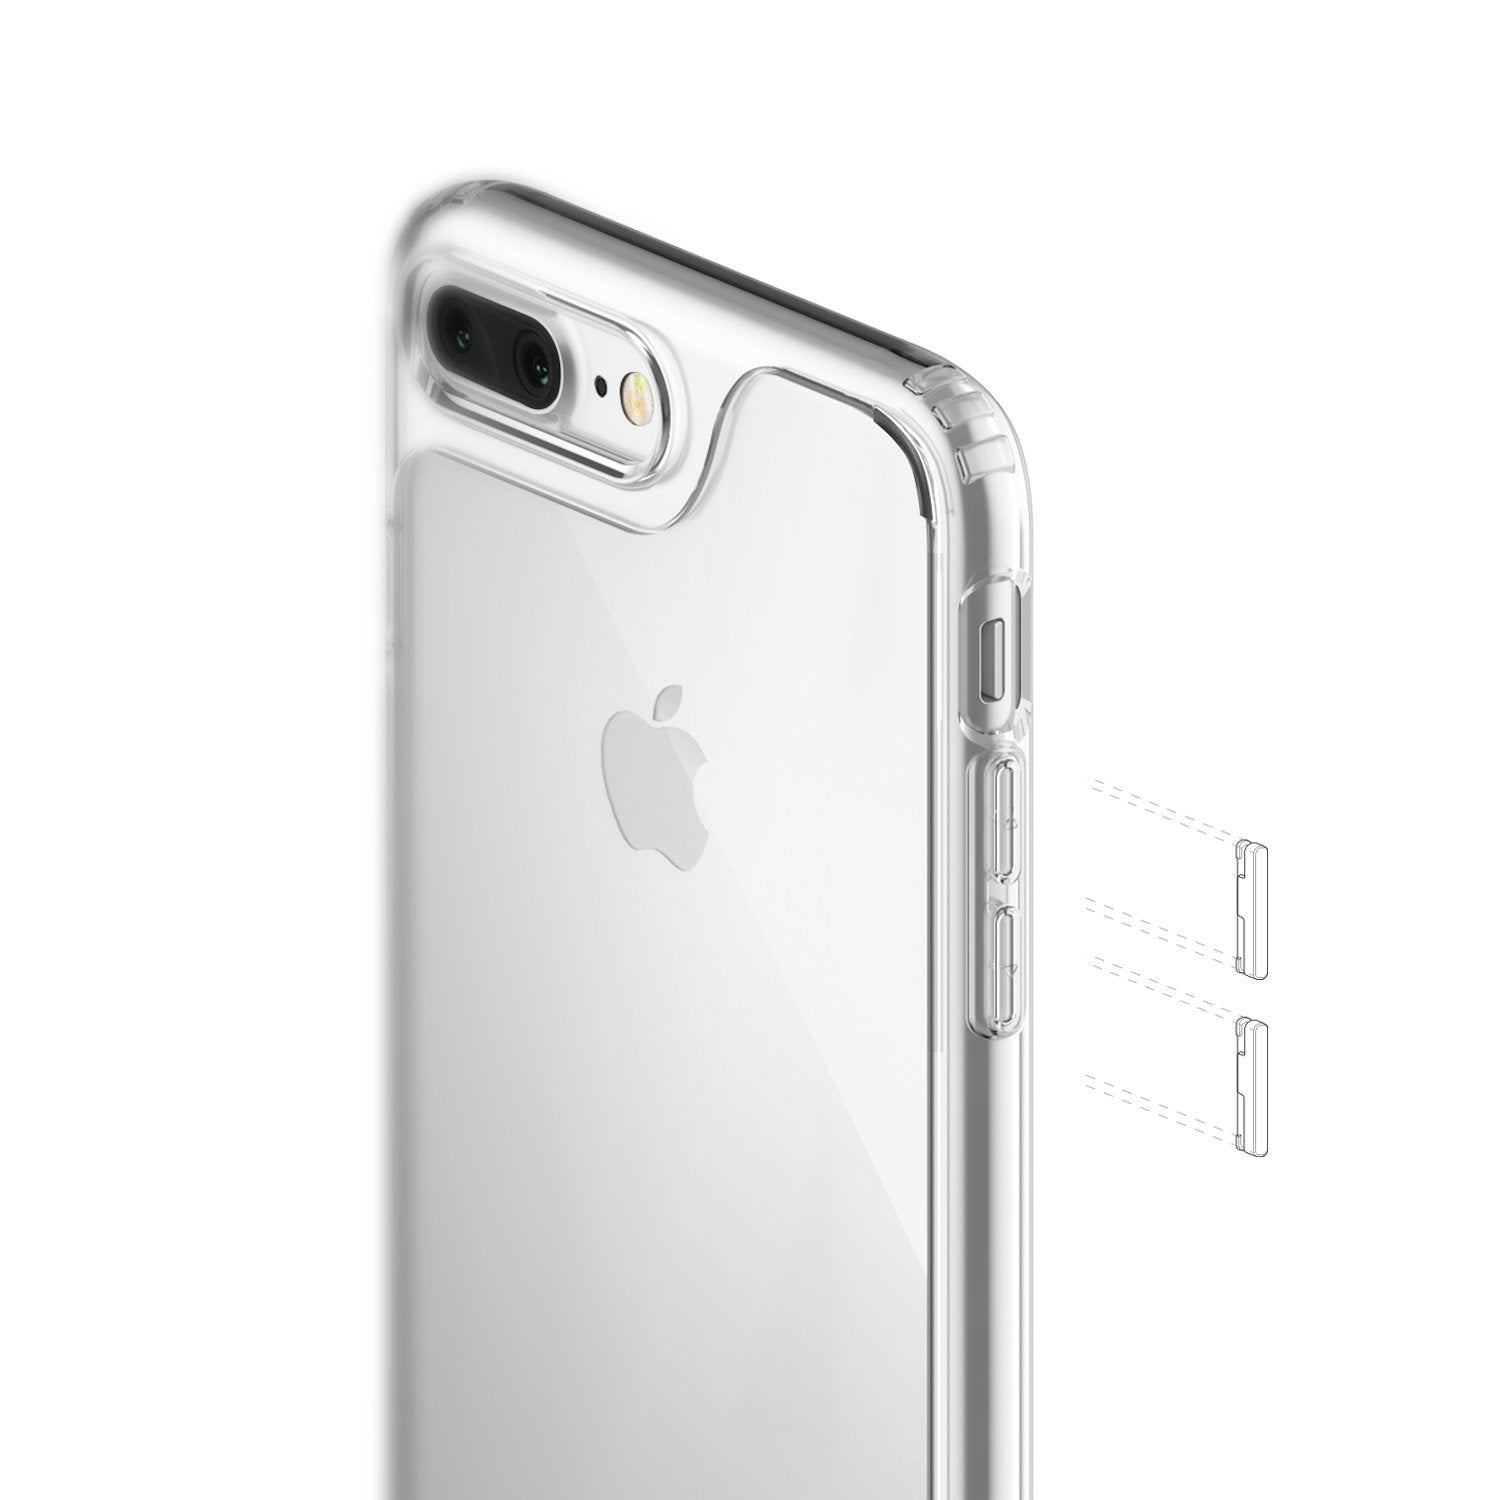 iPhone 7 Plus Caseology Waterfall Series Slim Transparent Clear Cushion Grip